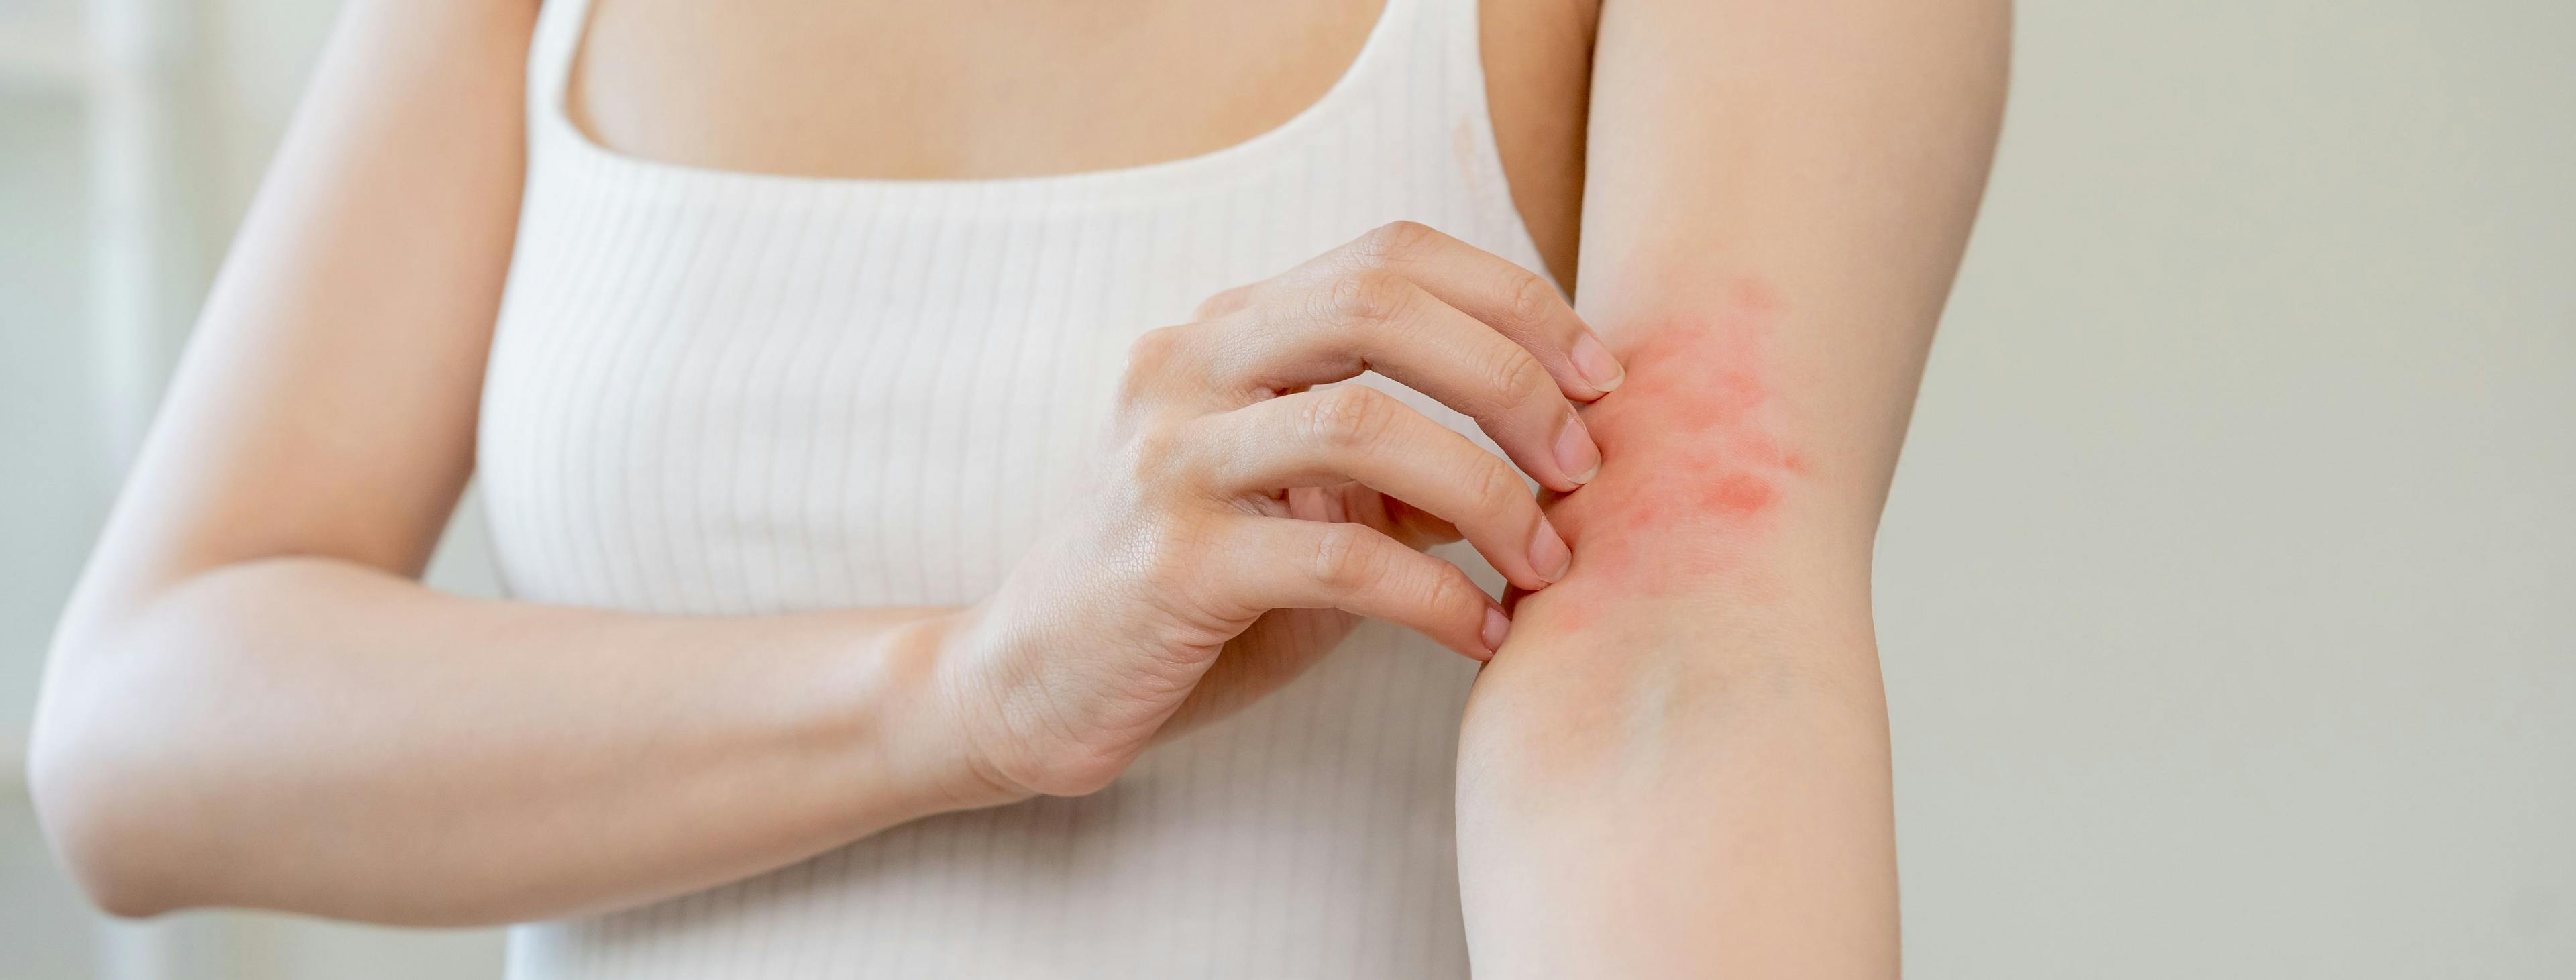 Female patient scratching atopic dermatitis (AD) | Image Credit: KMPZZZ - stock.adobe.com